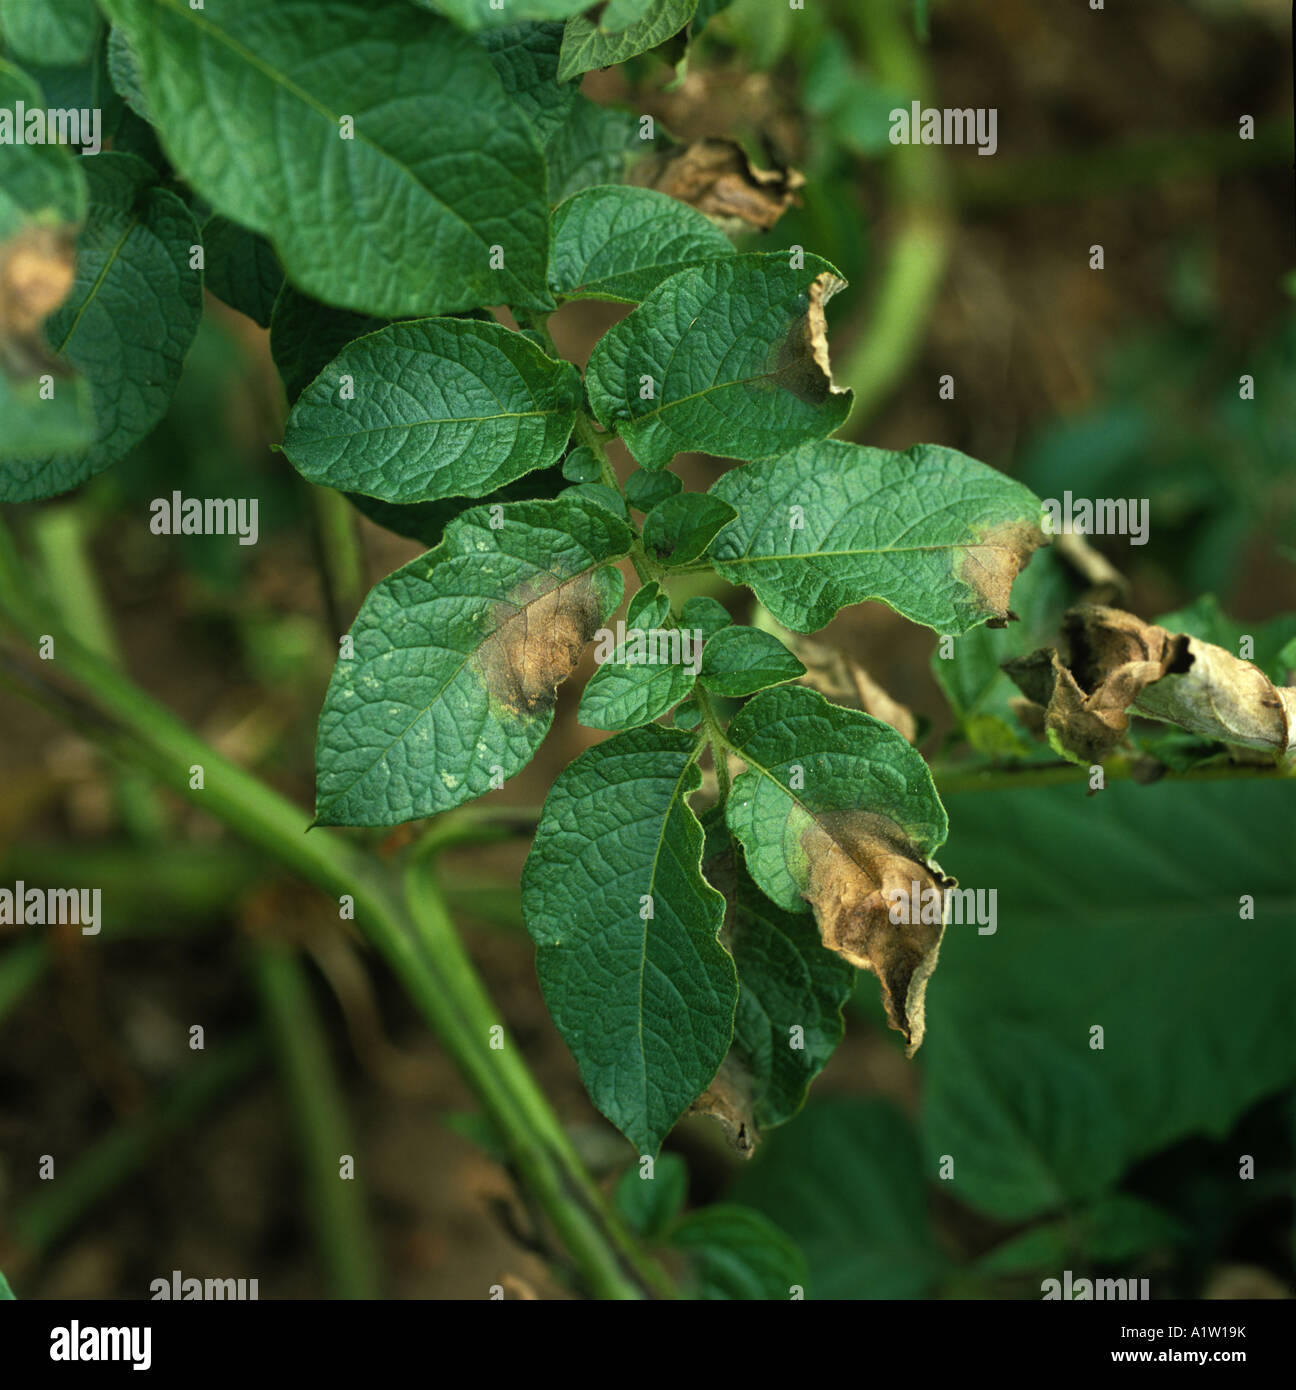 Potato late blight Phytophthora infestans lesions on potato foliage Stock Photo